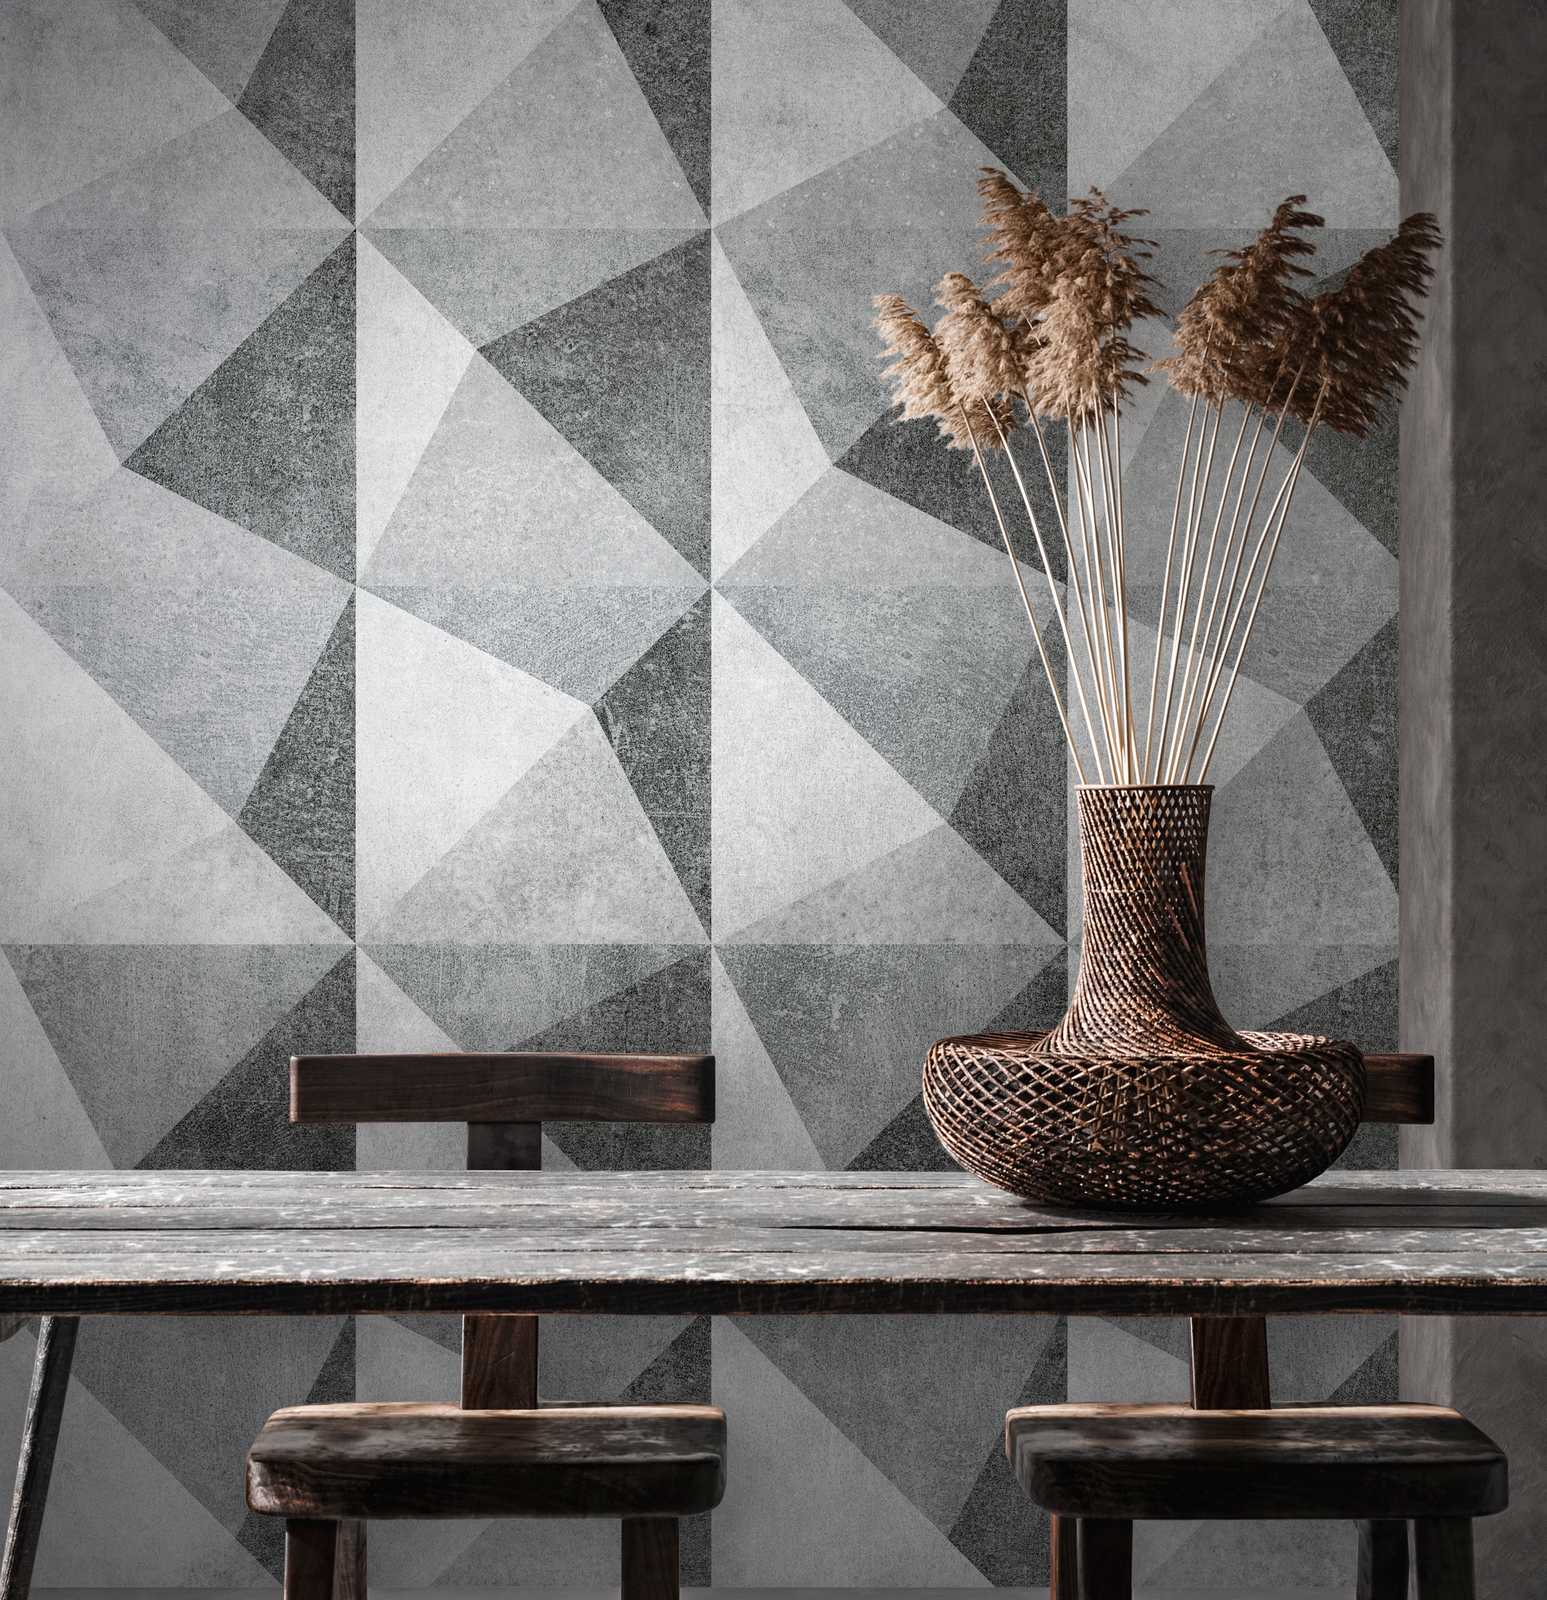             Wallpaper novelty | motif wallpaper 3D design with concrete look
        